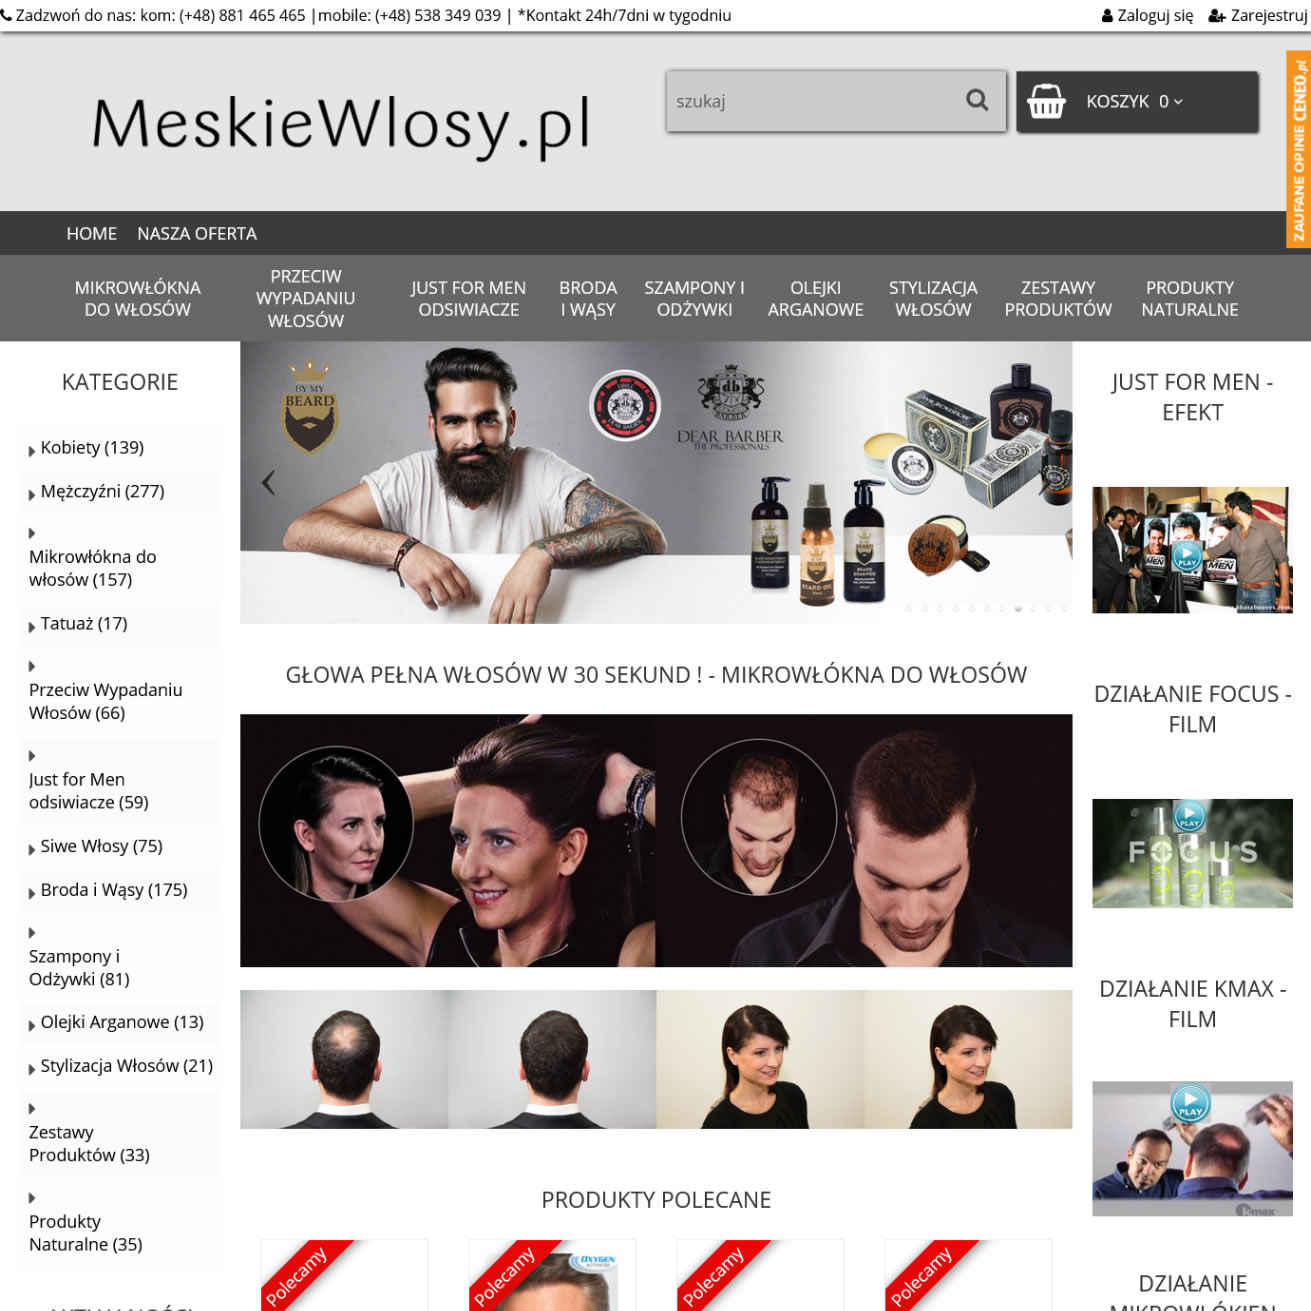 meskiewlosy.pl-image